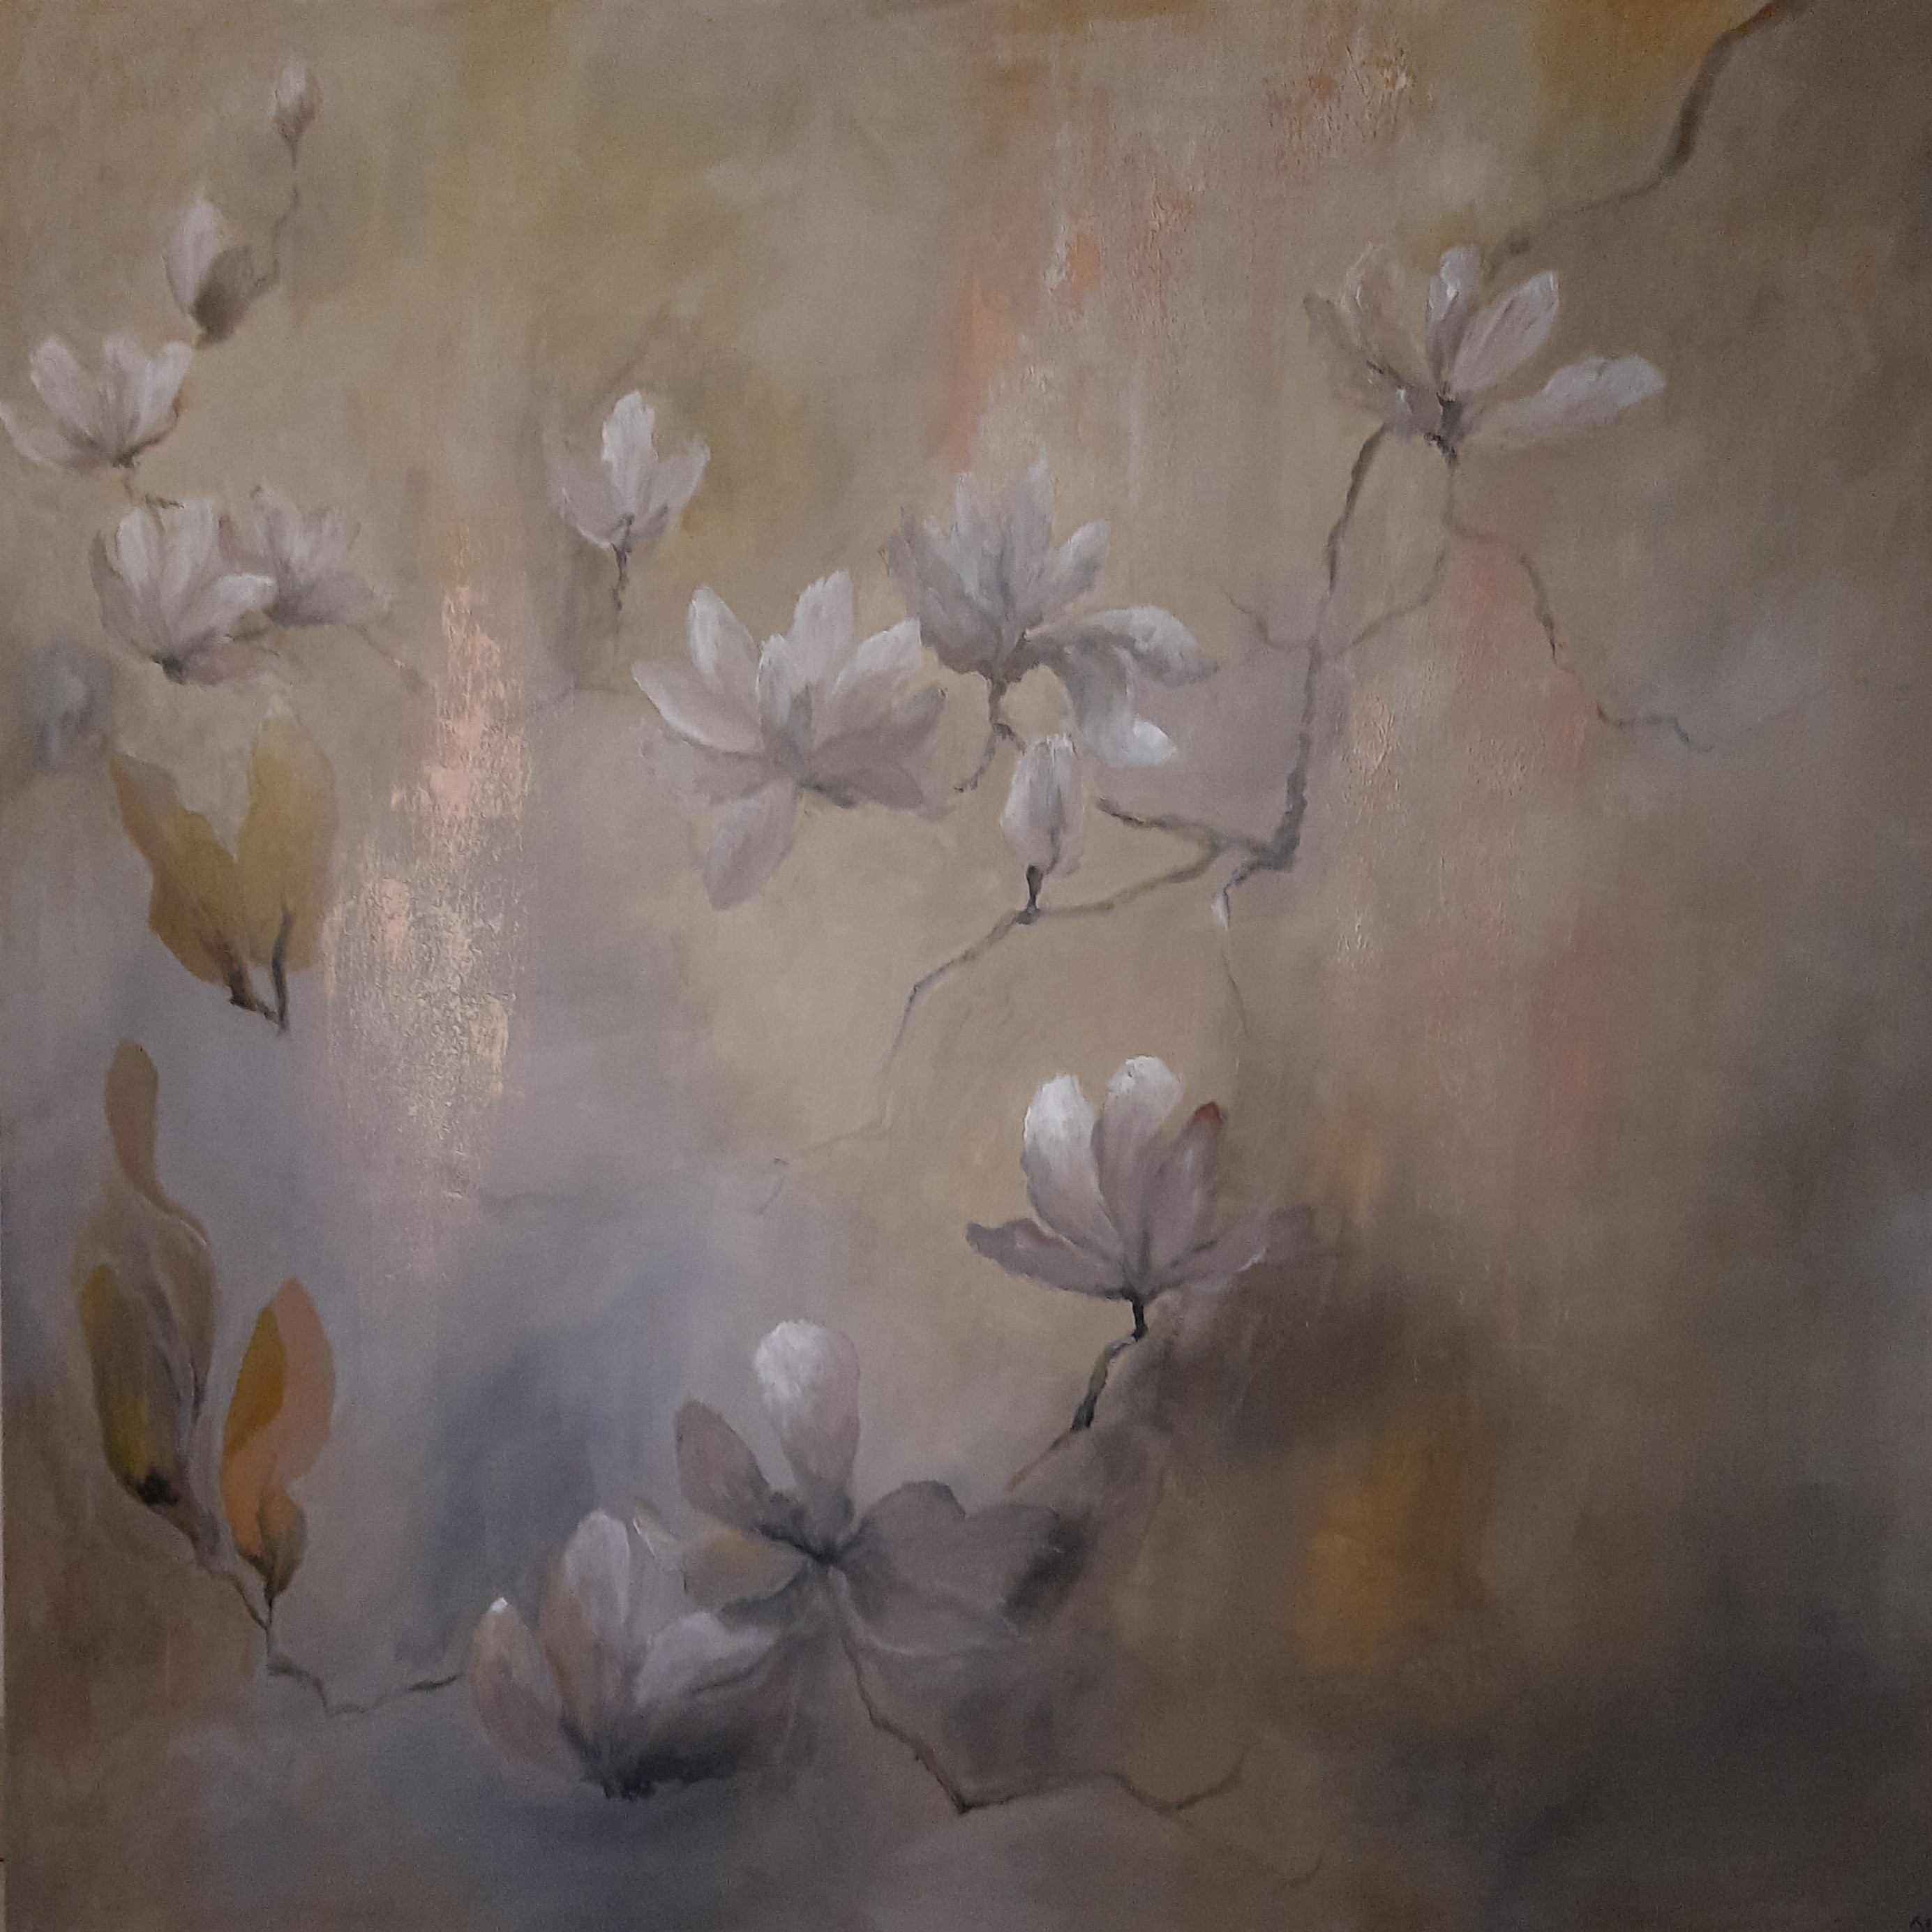 Magnificent magnolias by Jean wijesekera